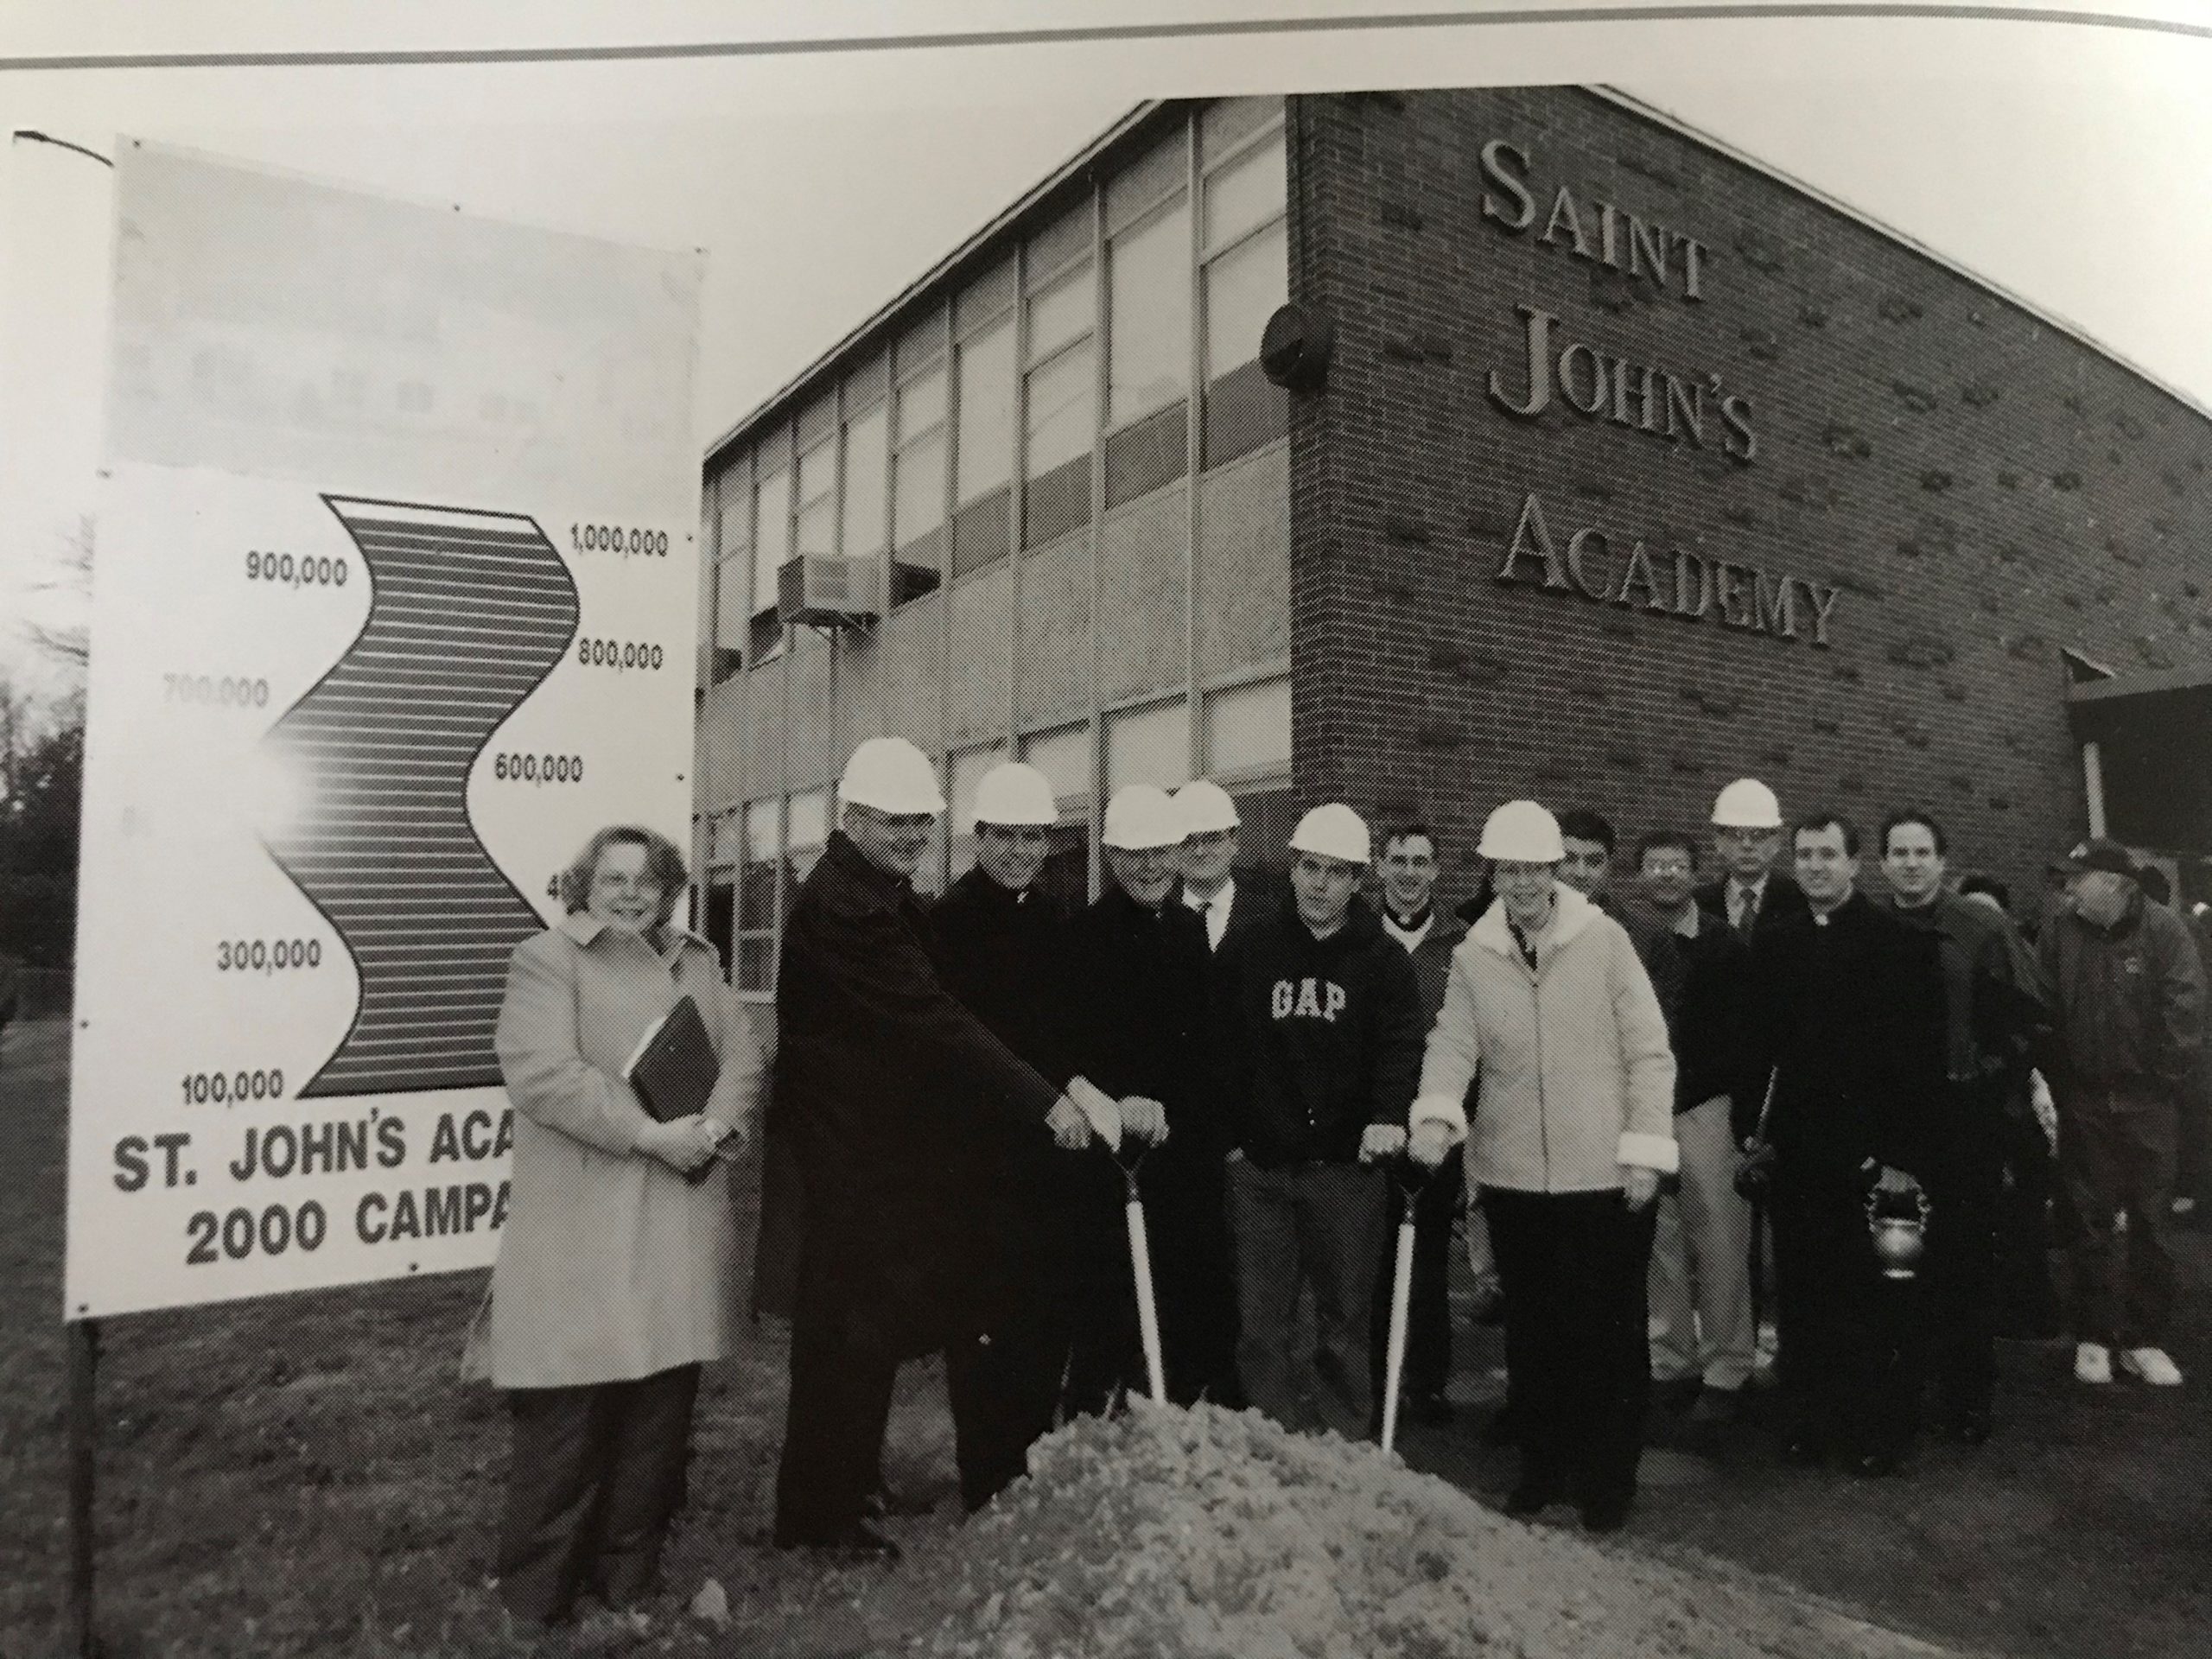 St. John's Academy, Hillsdale, New Jersey